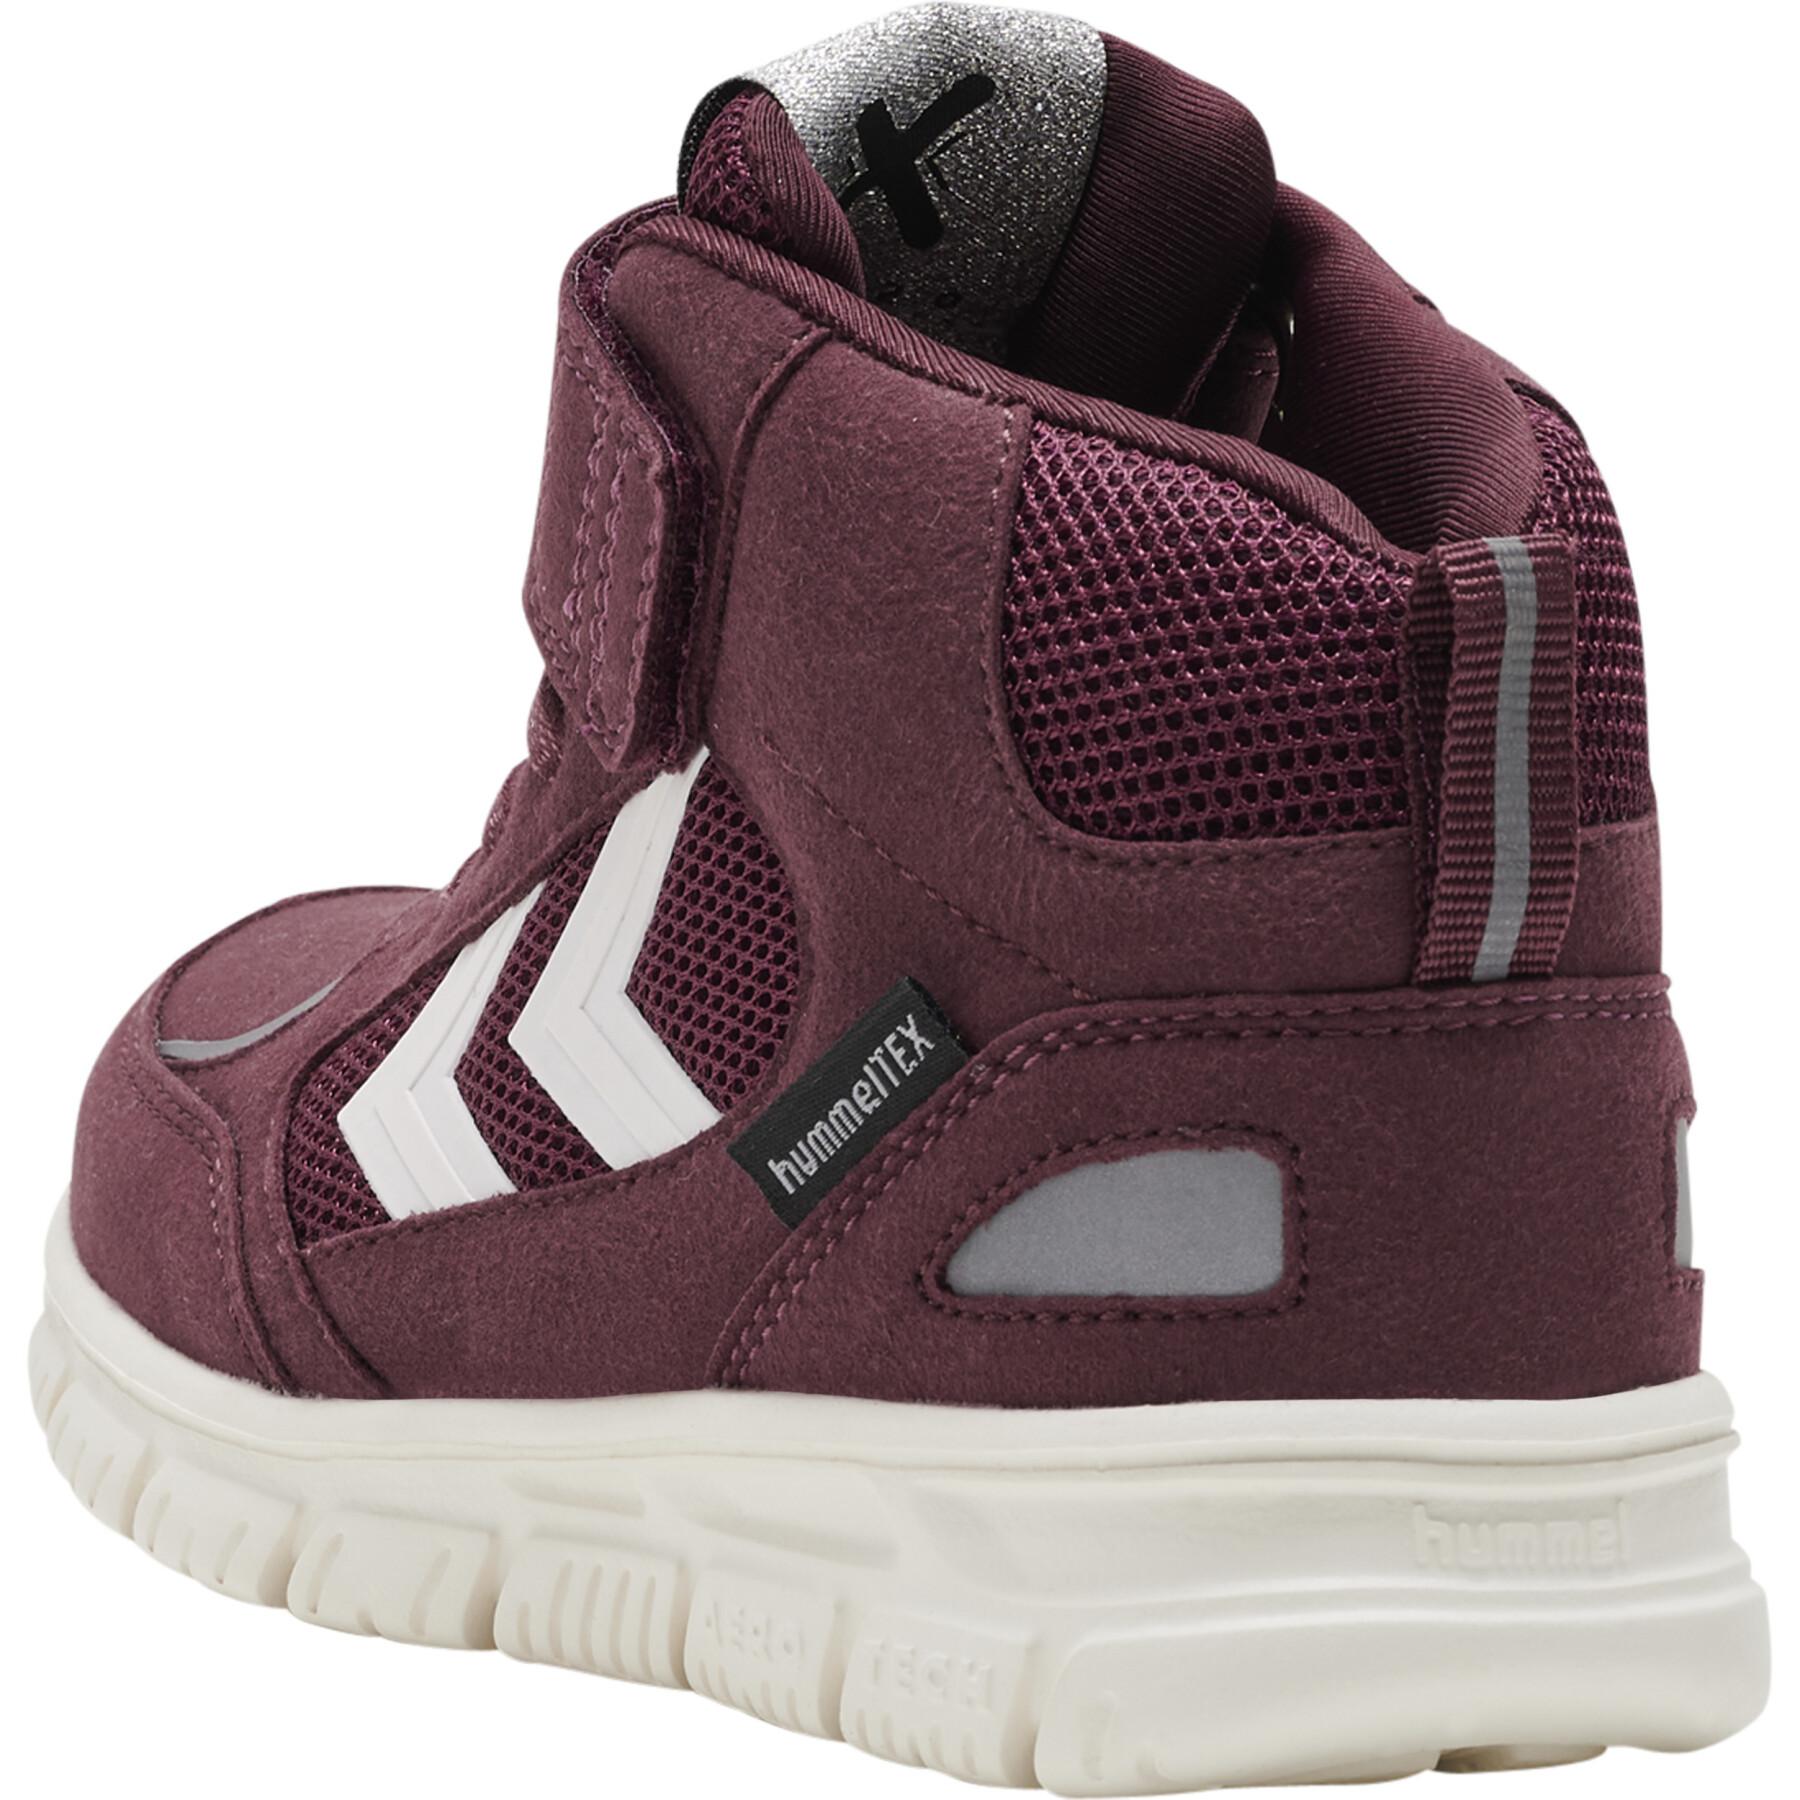 Children's sneakers Hummel X-Light 2.0 Mid Tex